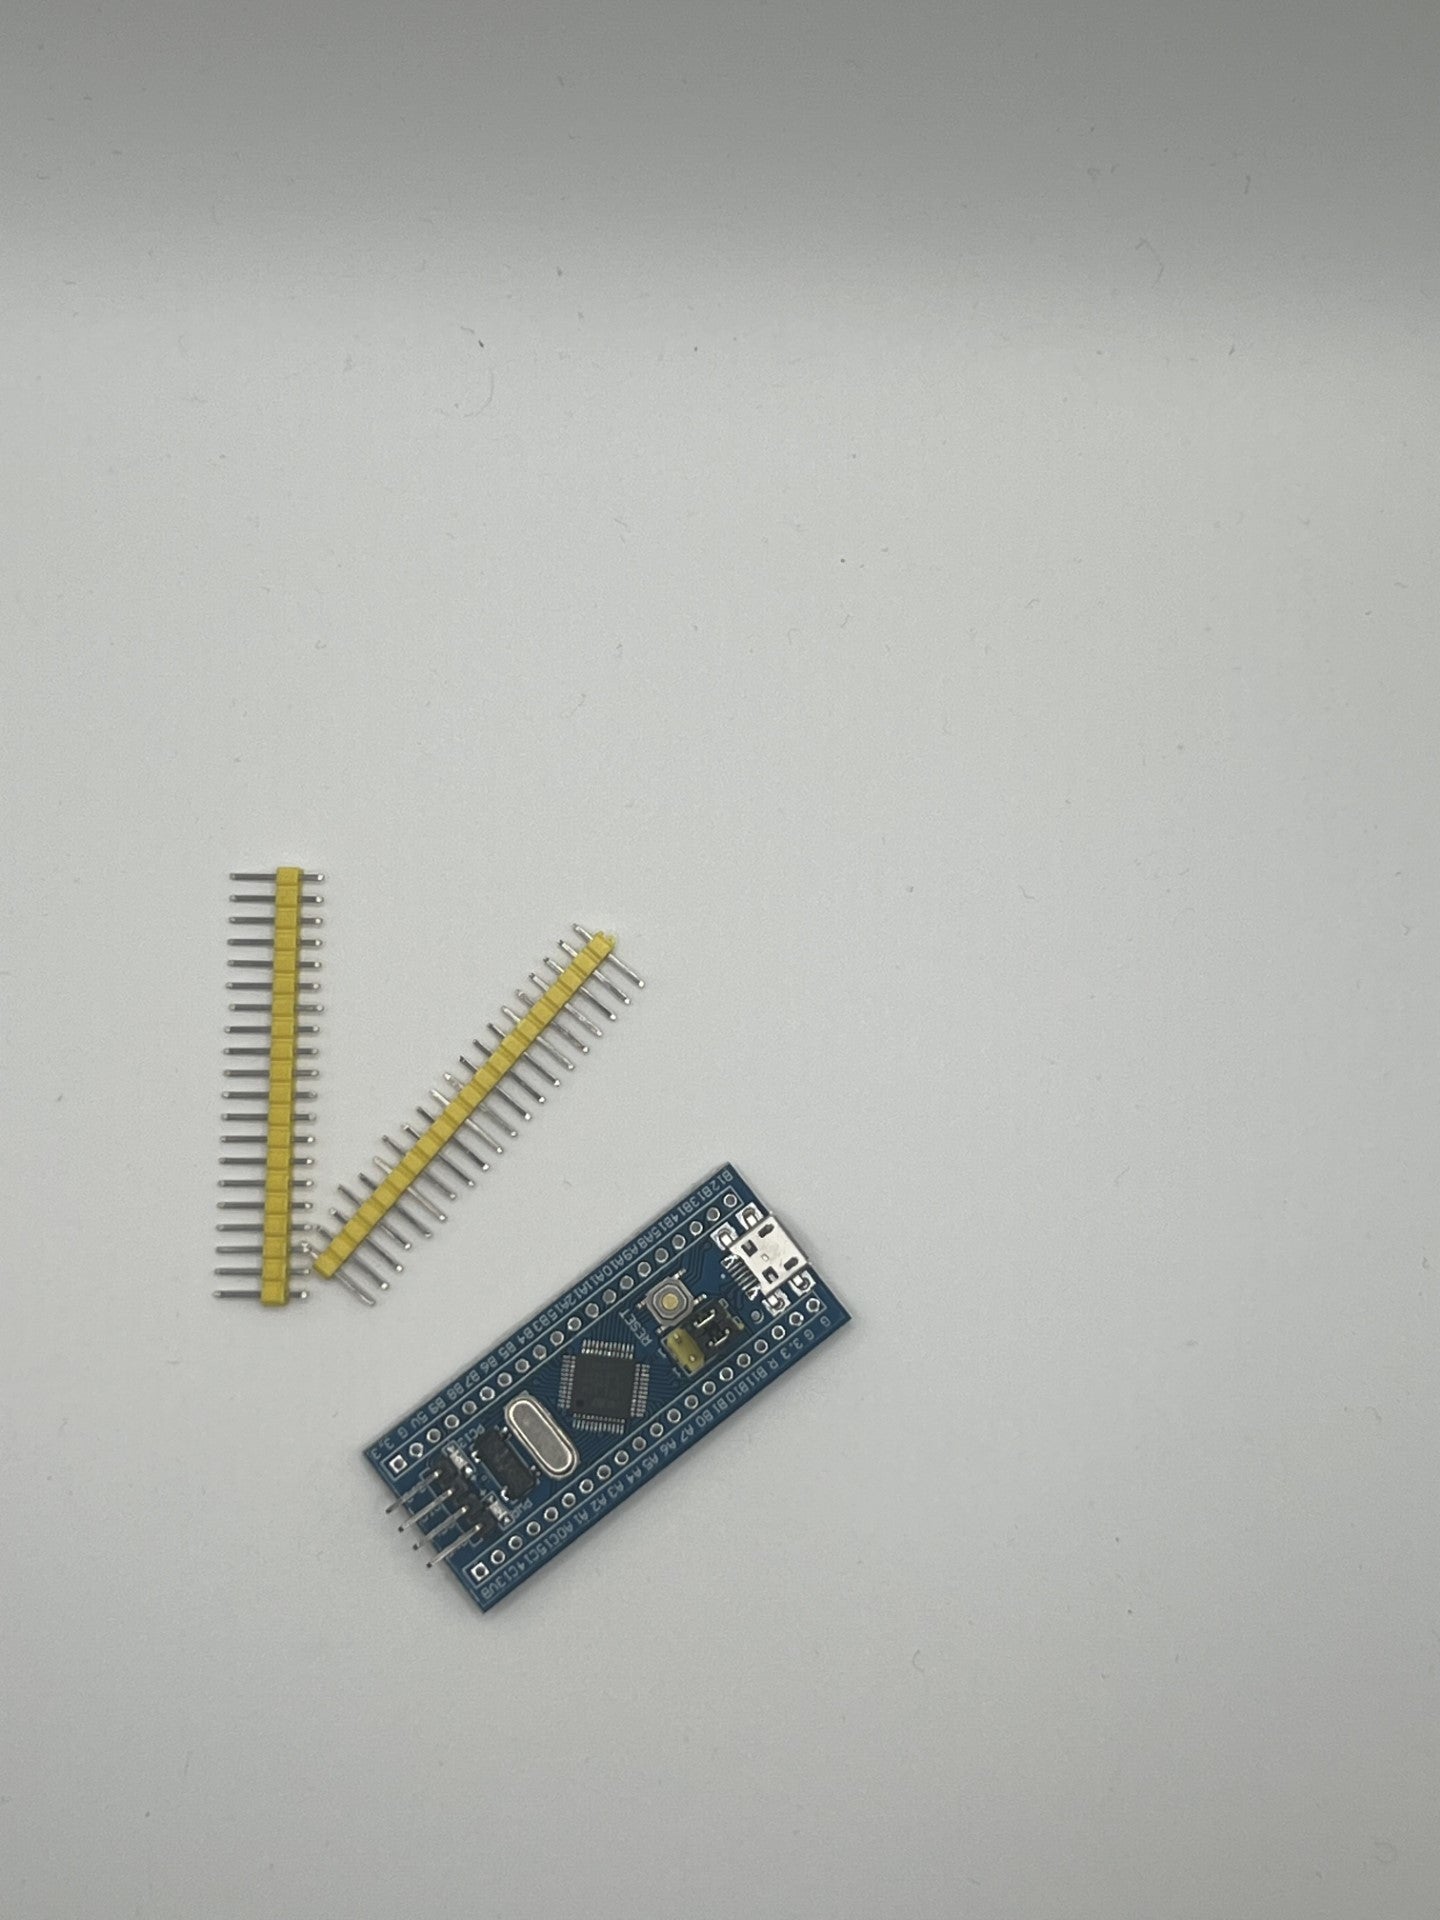 Bluepill Minimum Micro USB System Development Board with yellow pins